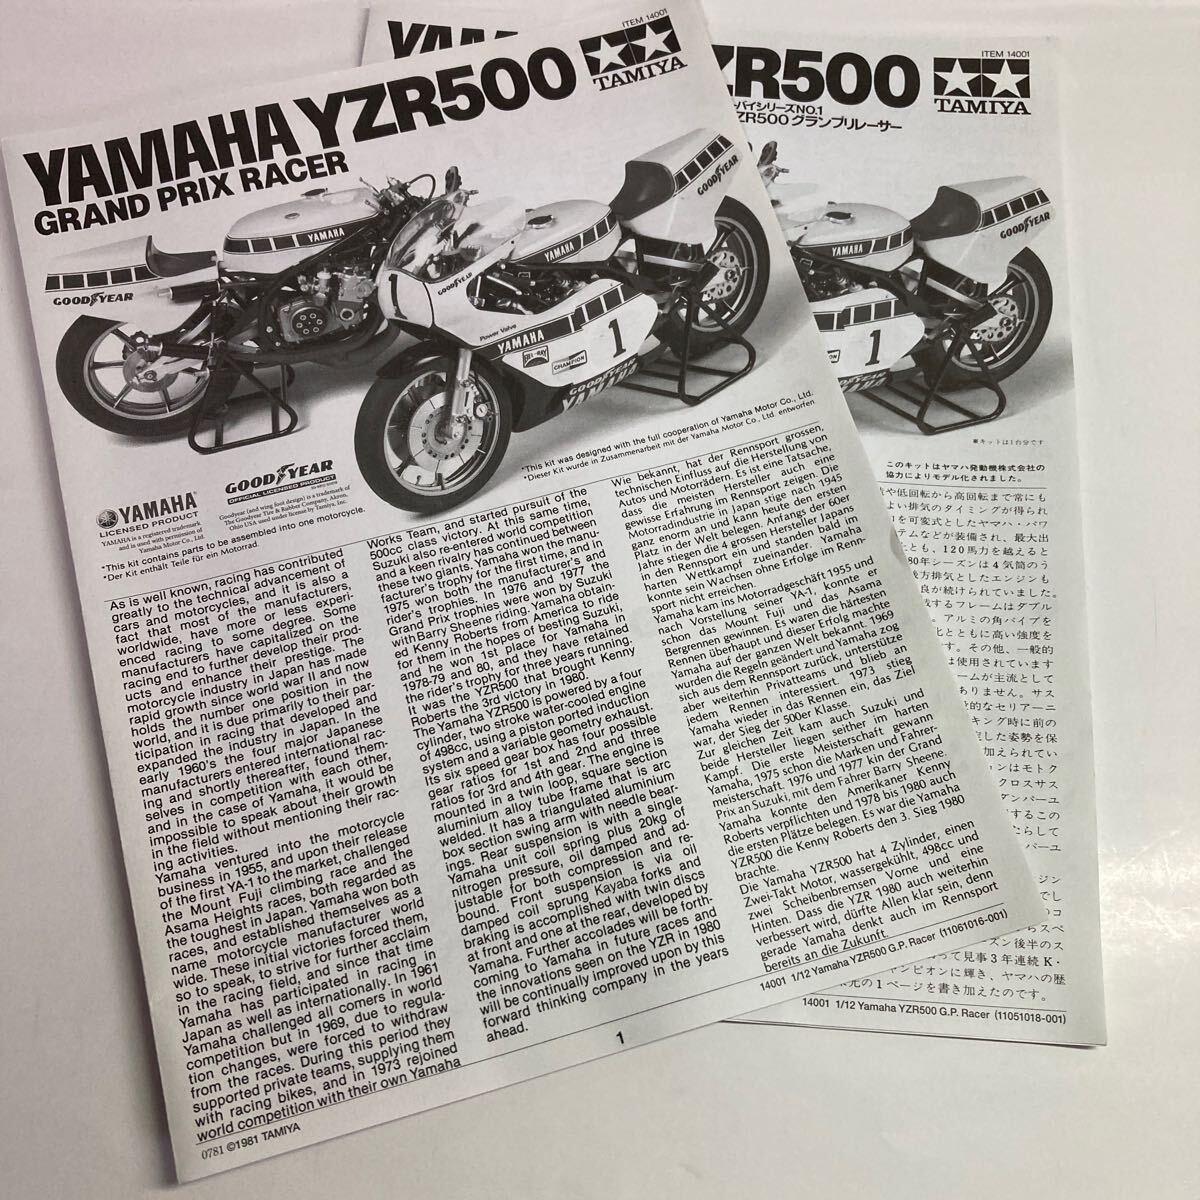  Tamiya 1/12 Yamaha YZR500\'80 Grand Prix Racer karuto graph version not yet system work TAMIYA YAMAHA